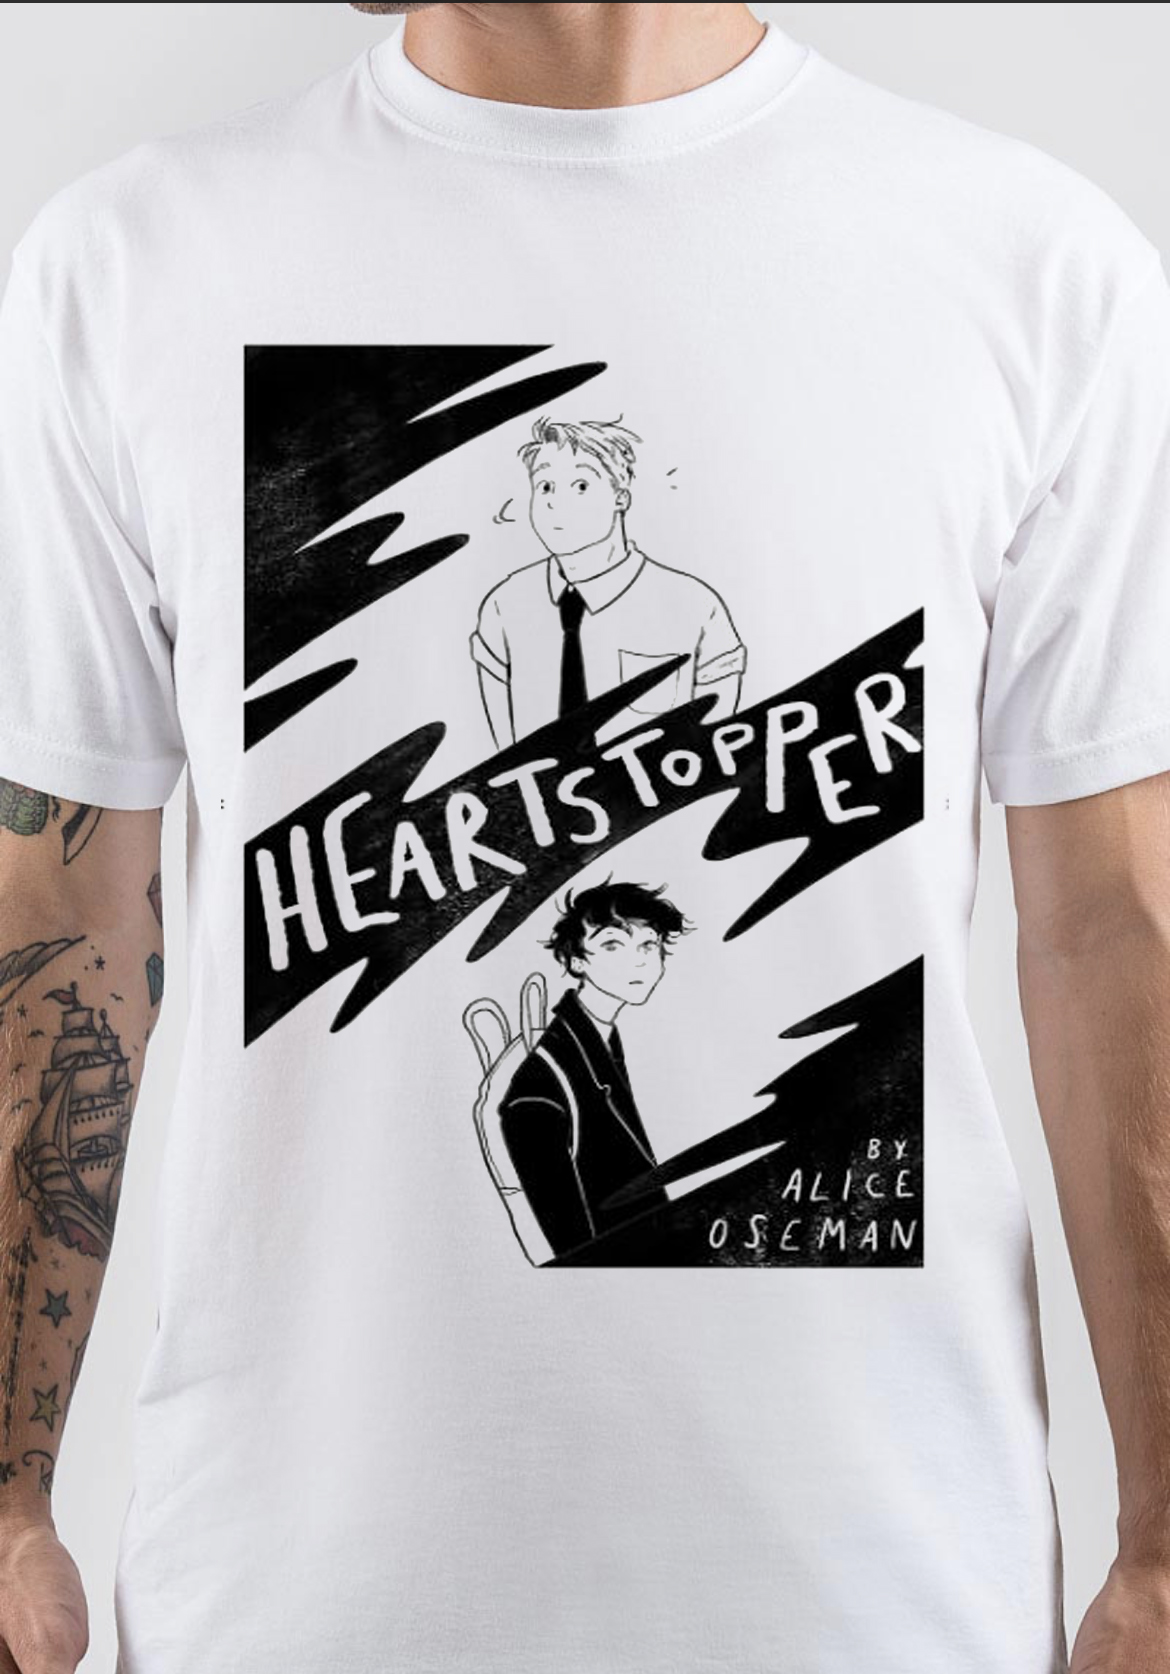 Heartstopper T-Shirt And Merchandise